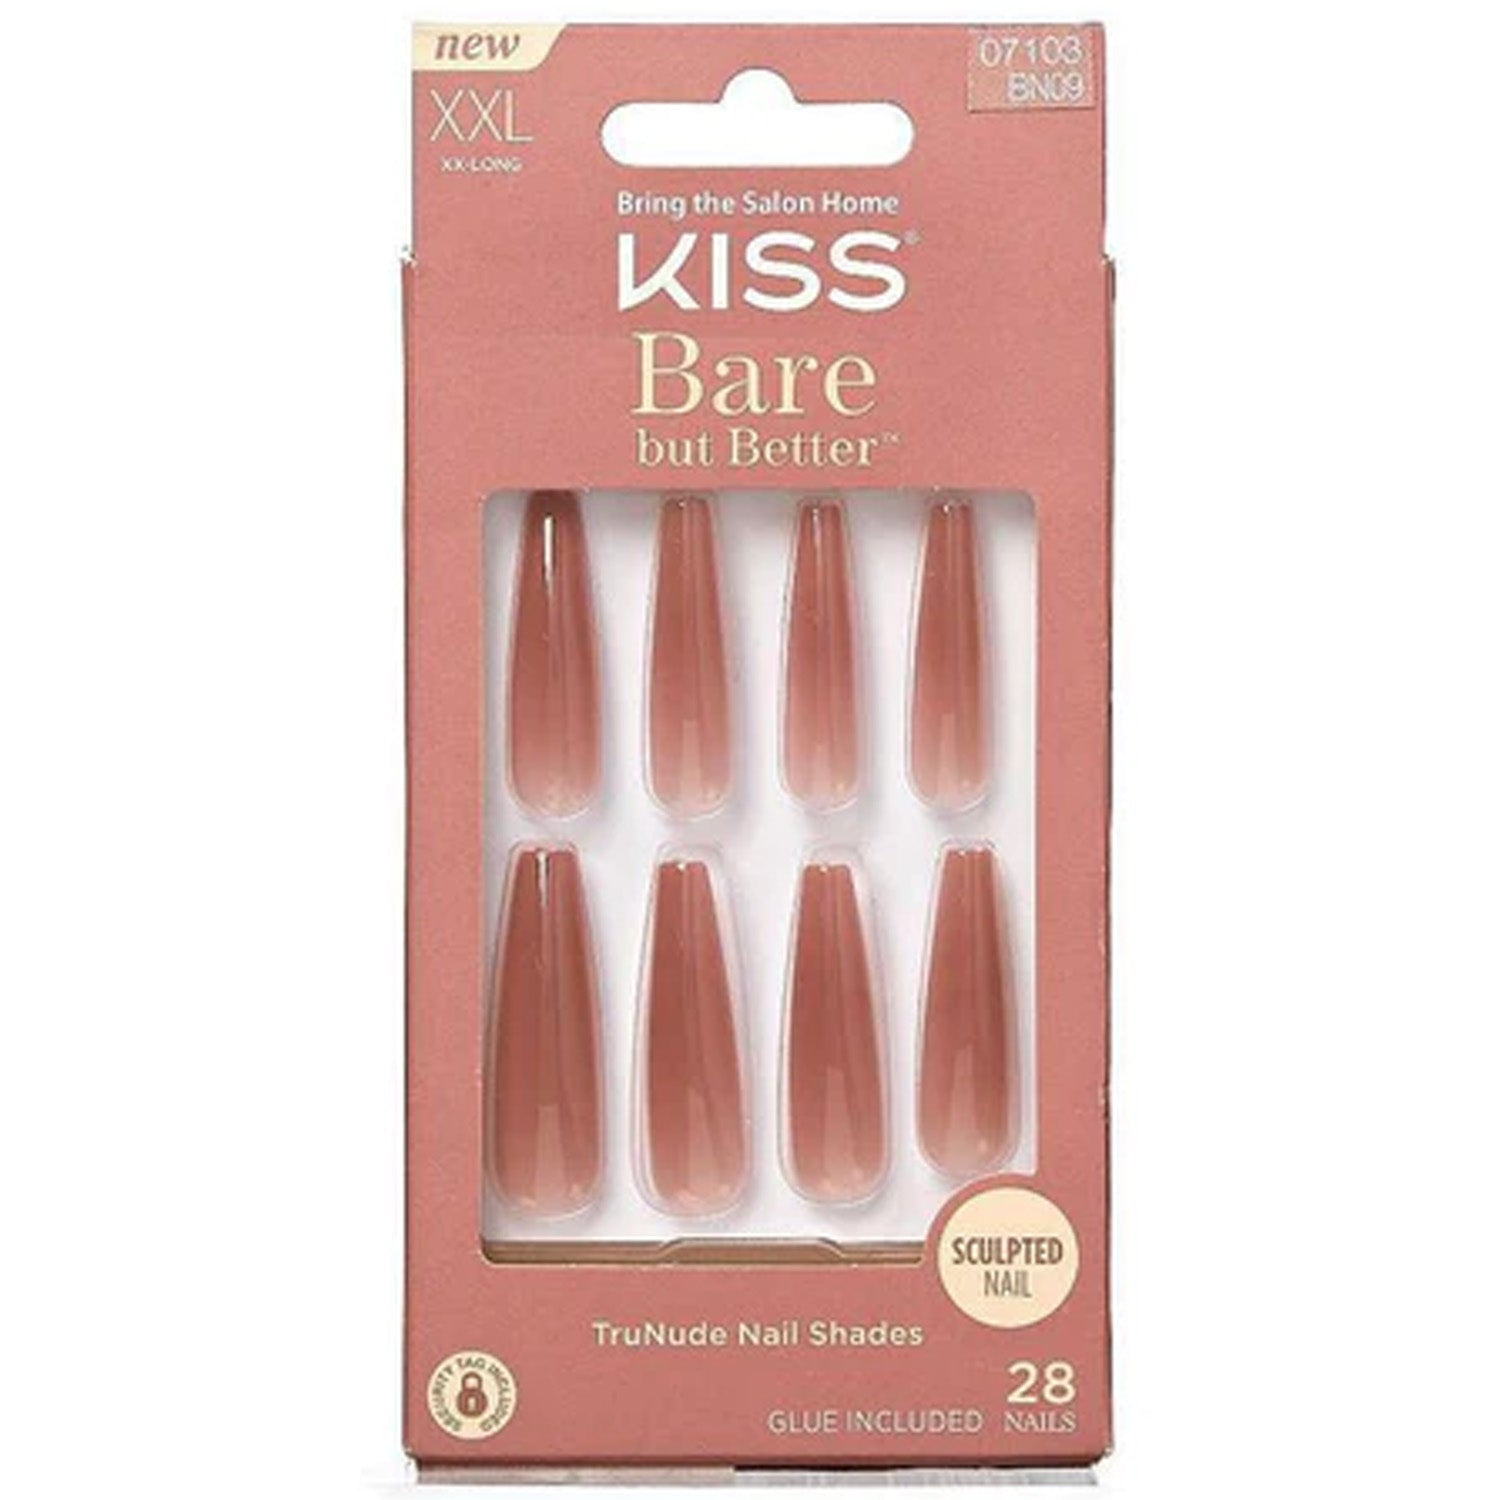 KISS 100 Full Cover Fake Nails Kit, Medium Length - Active Oval - Walmart .com